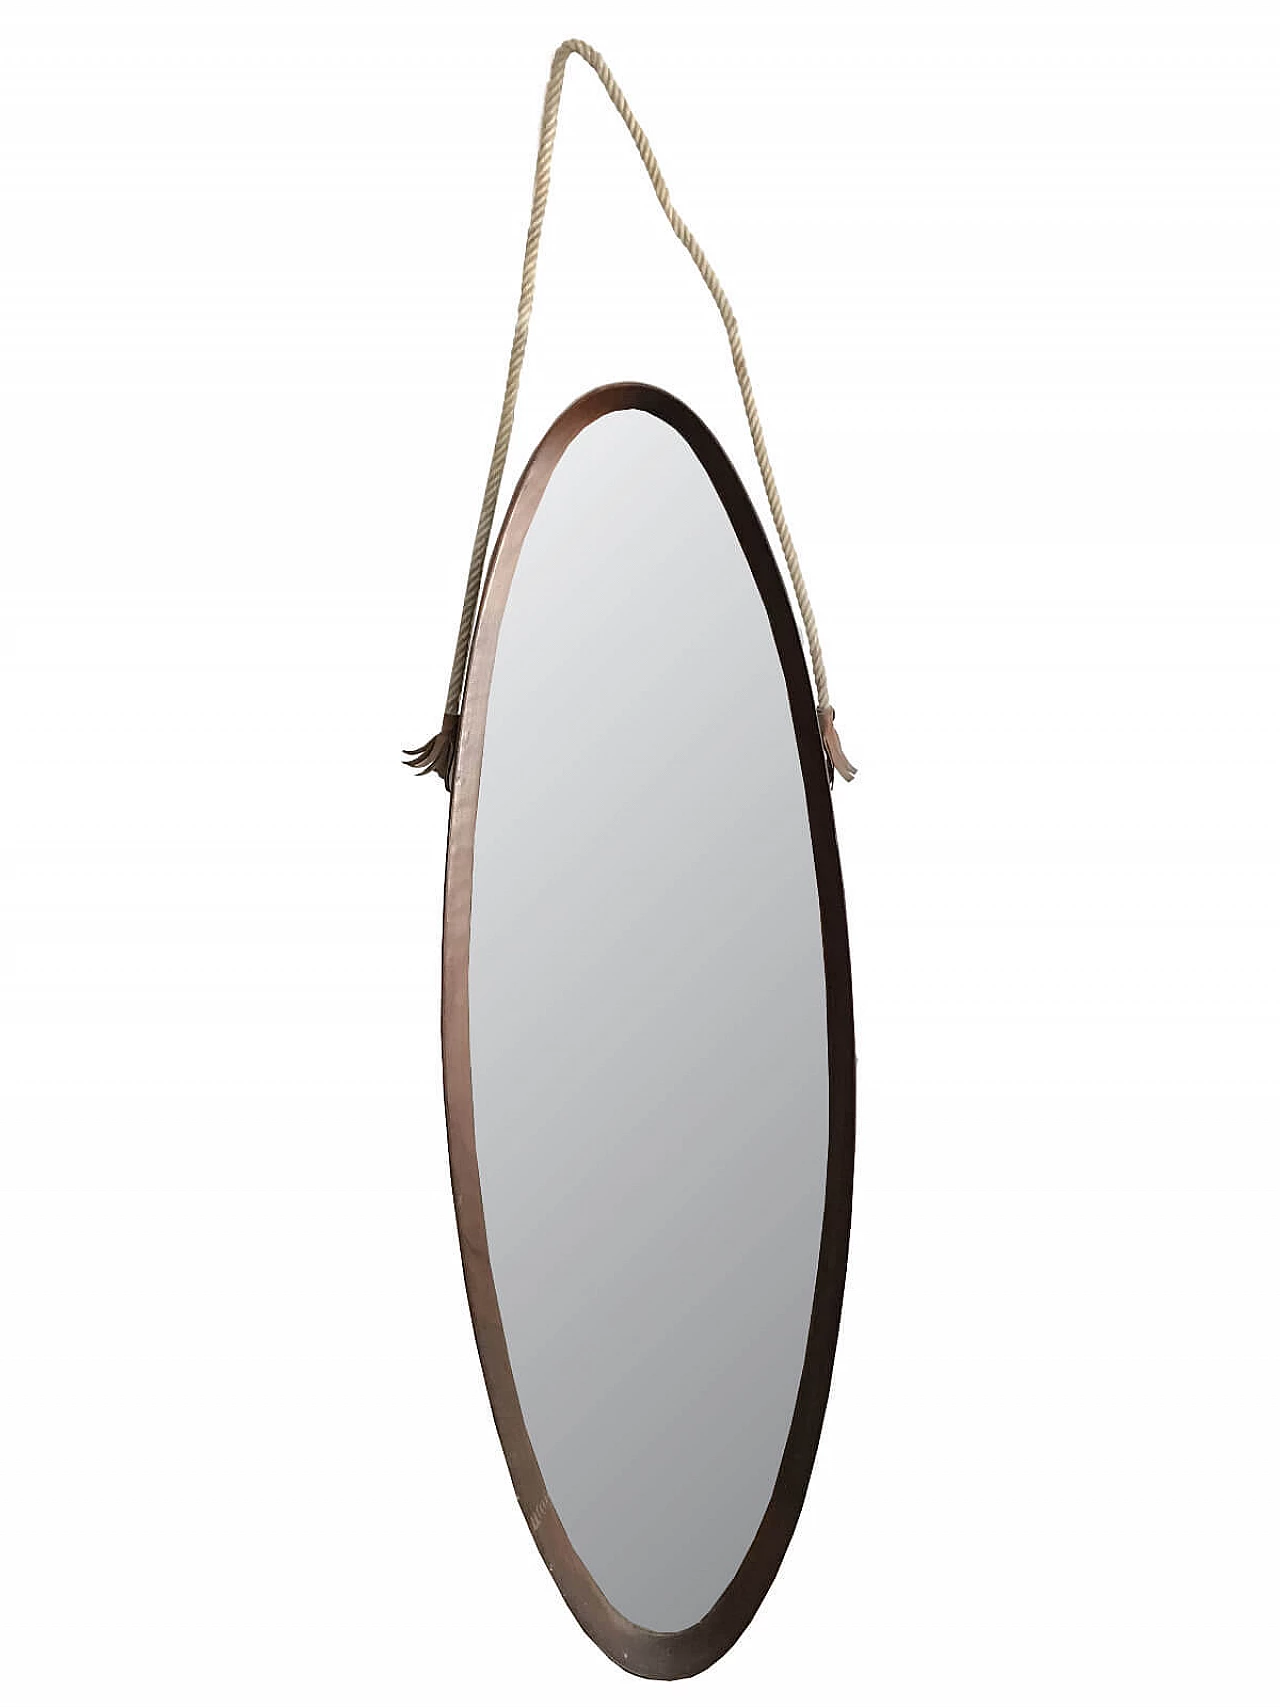 Specchio ovale entro cornice in teak 1040406